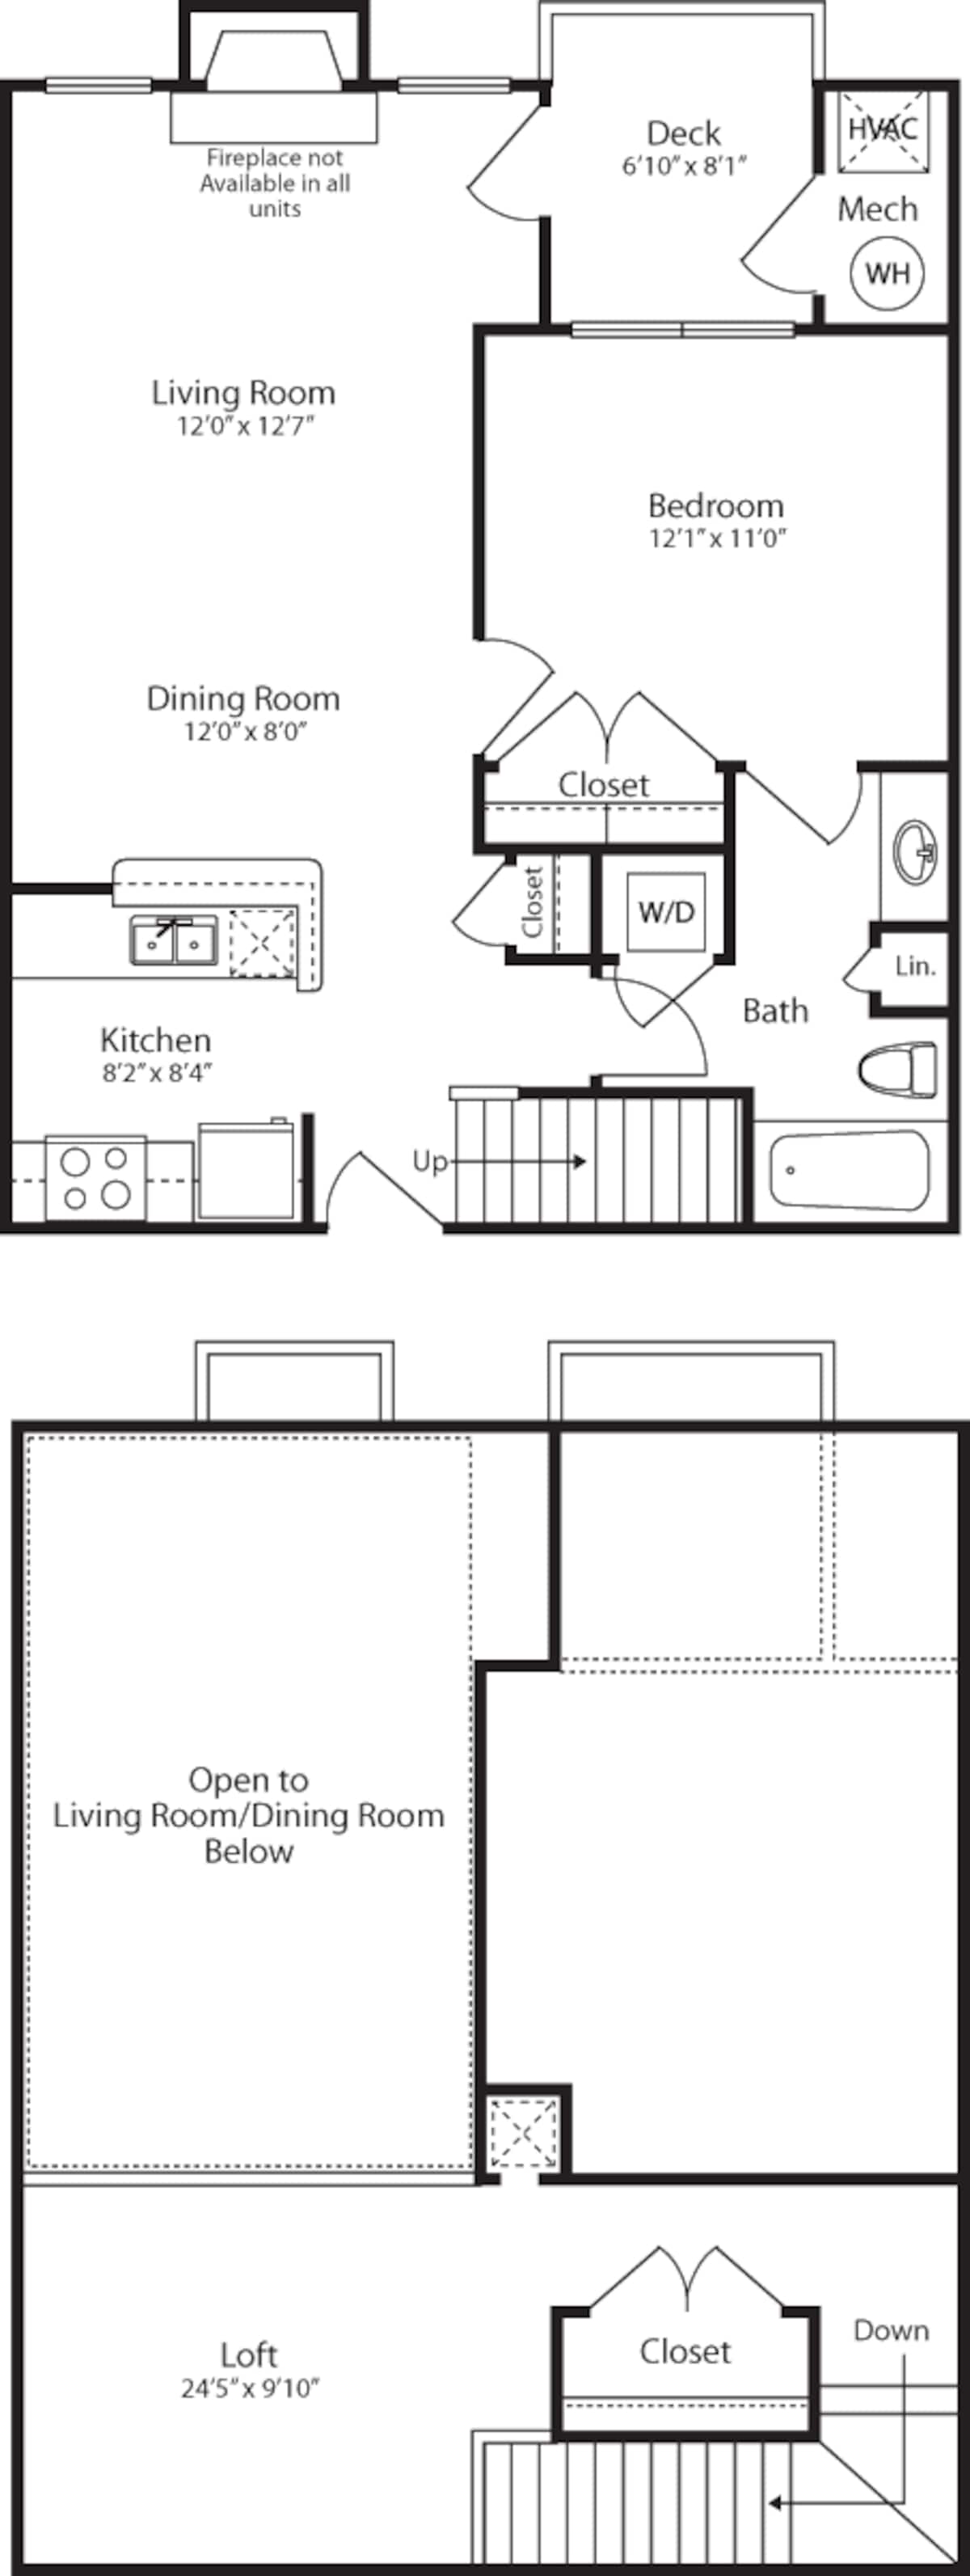 Floorplan diagram for The Devon with Loft, showing 1 bedroom